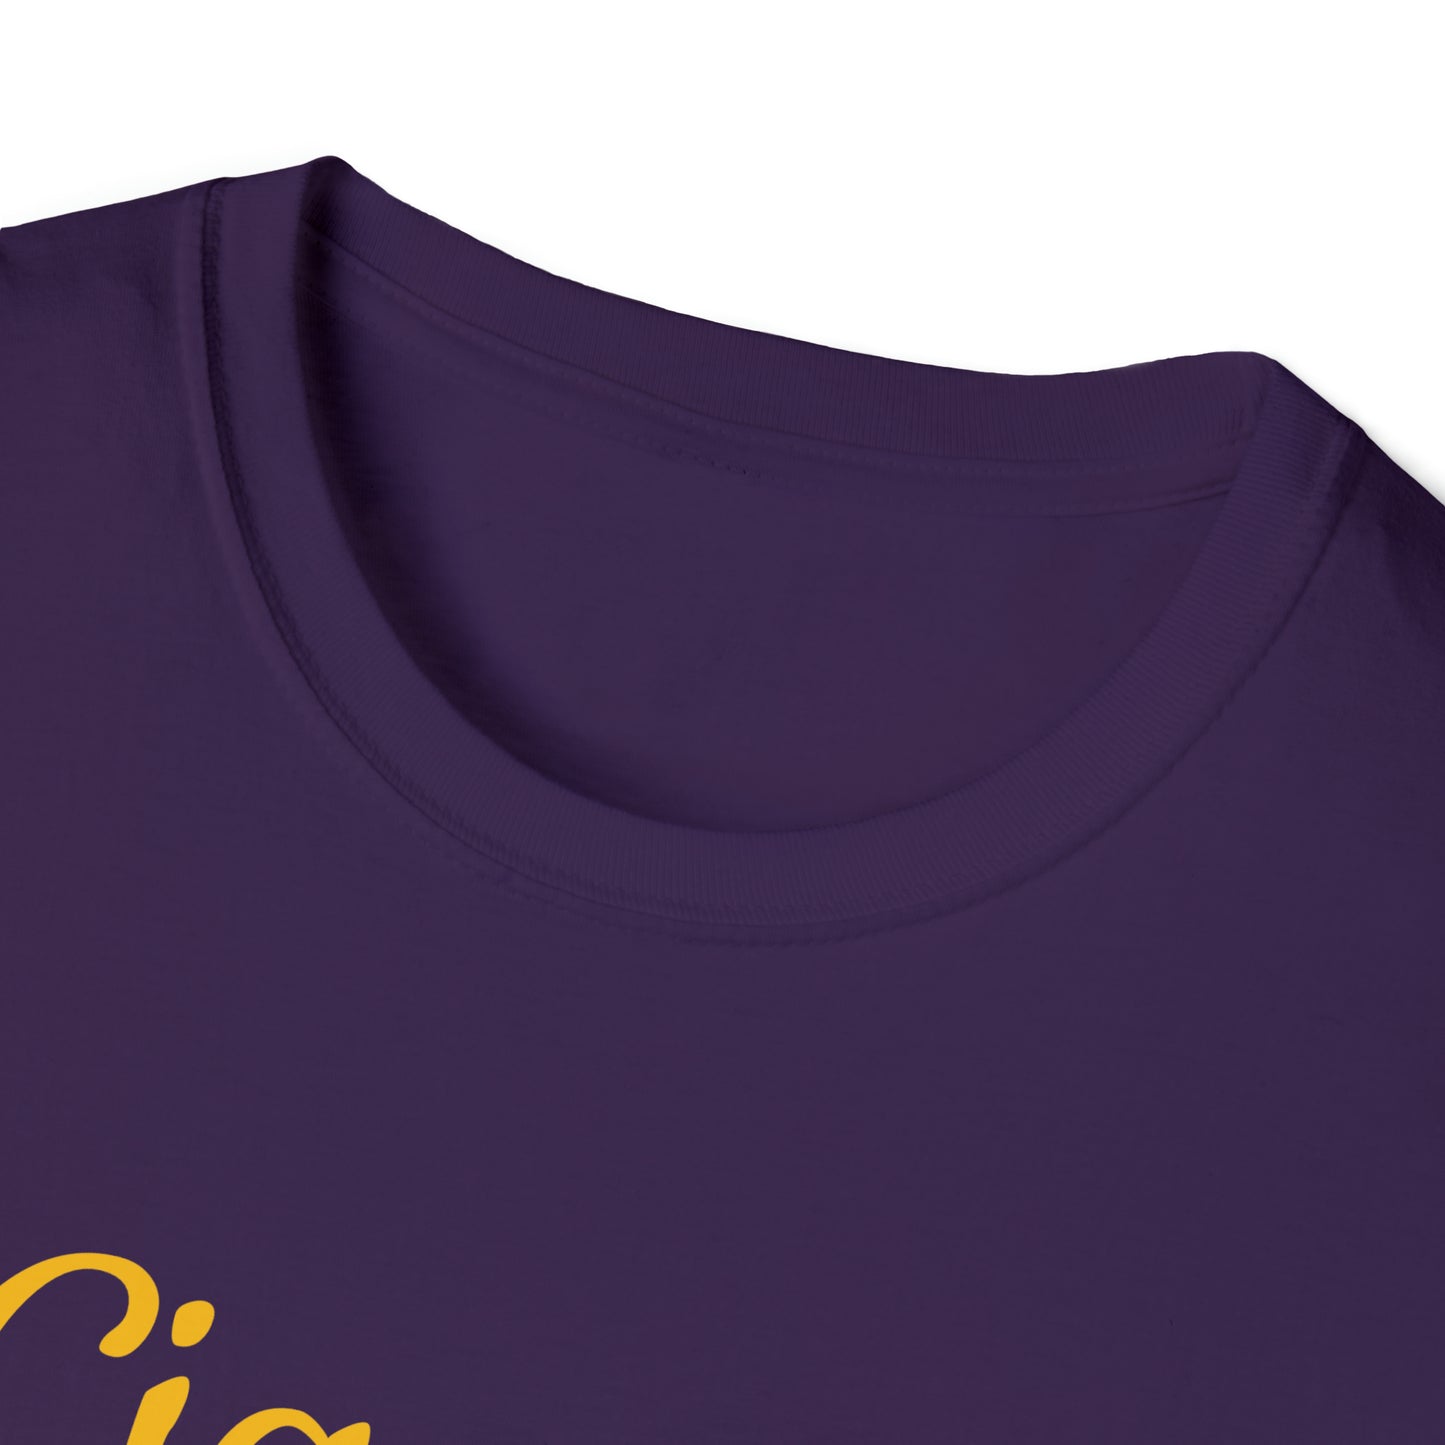 #CigarLife Unisex T-Shirt (Purple/Yellow)